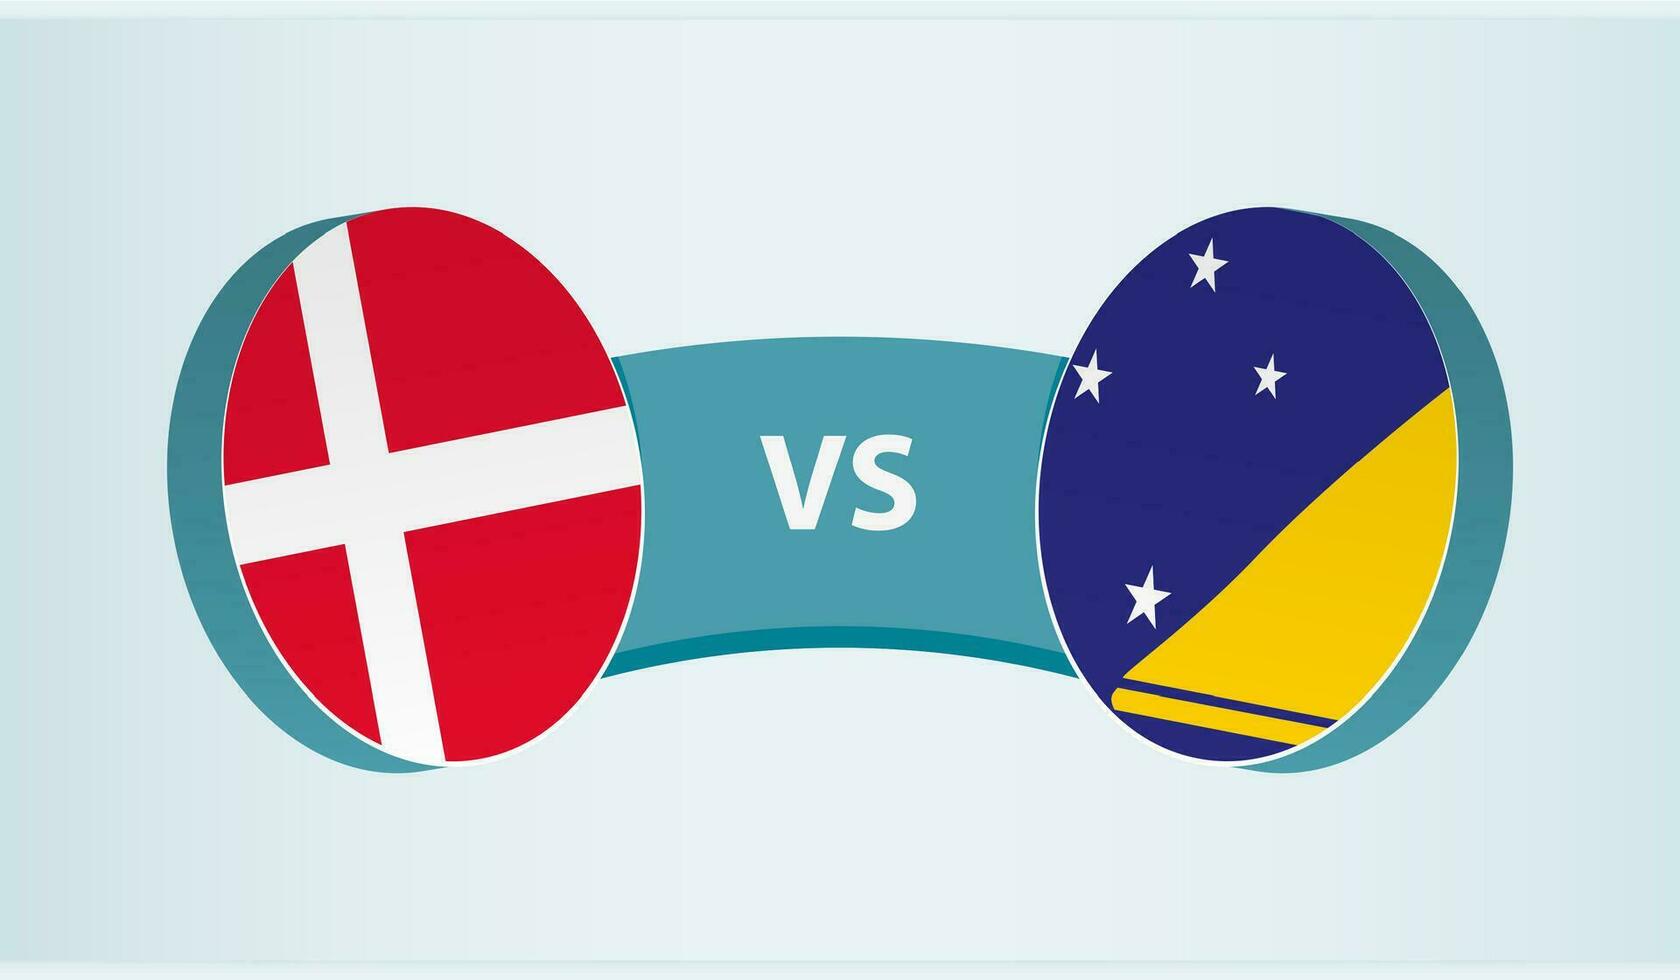 Denmark versus Tokelau, team sports competition concept. vector